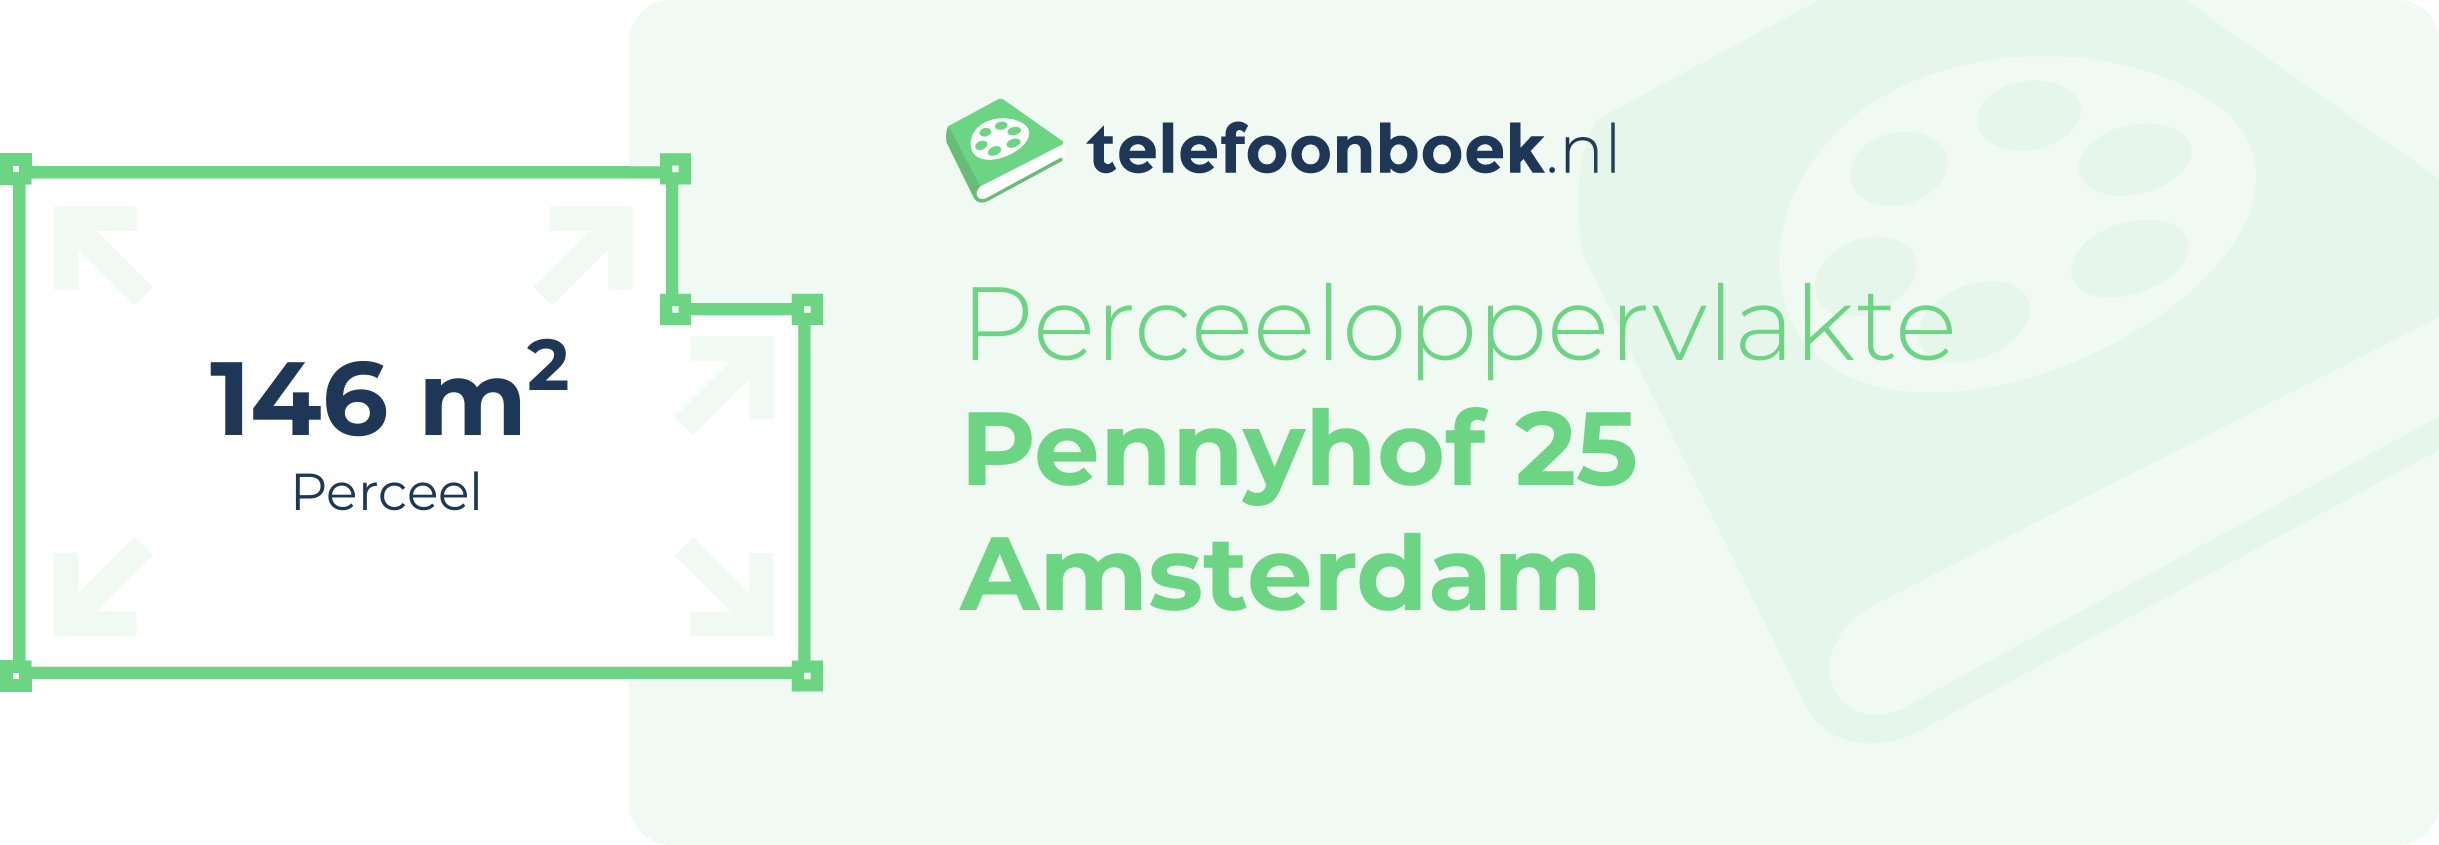 Perceeloppervlakte Pennyhof 25 Amsterdam